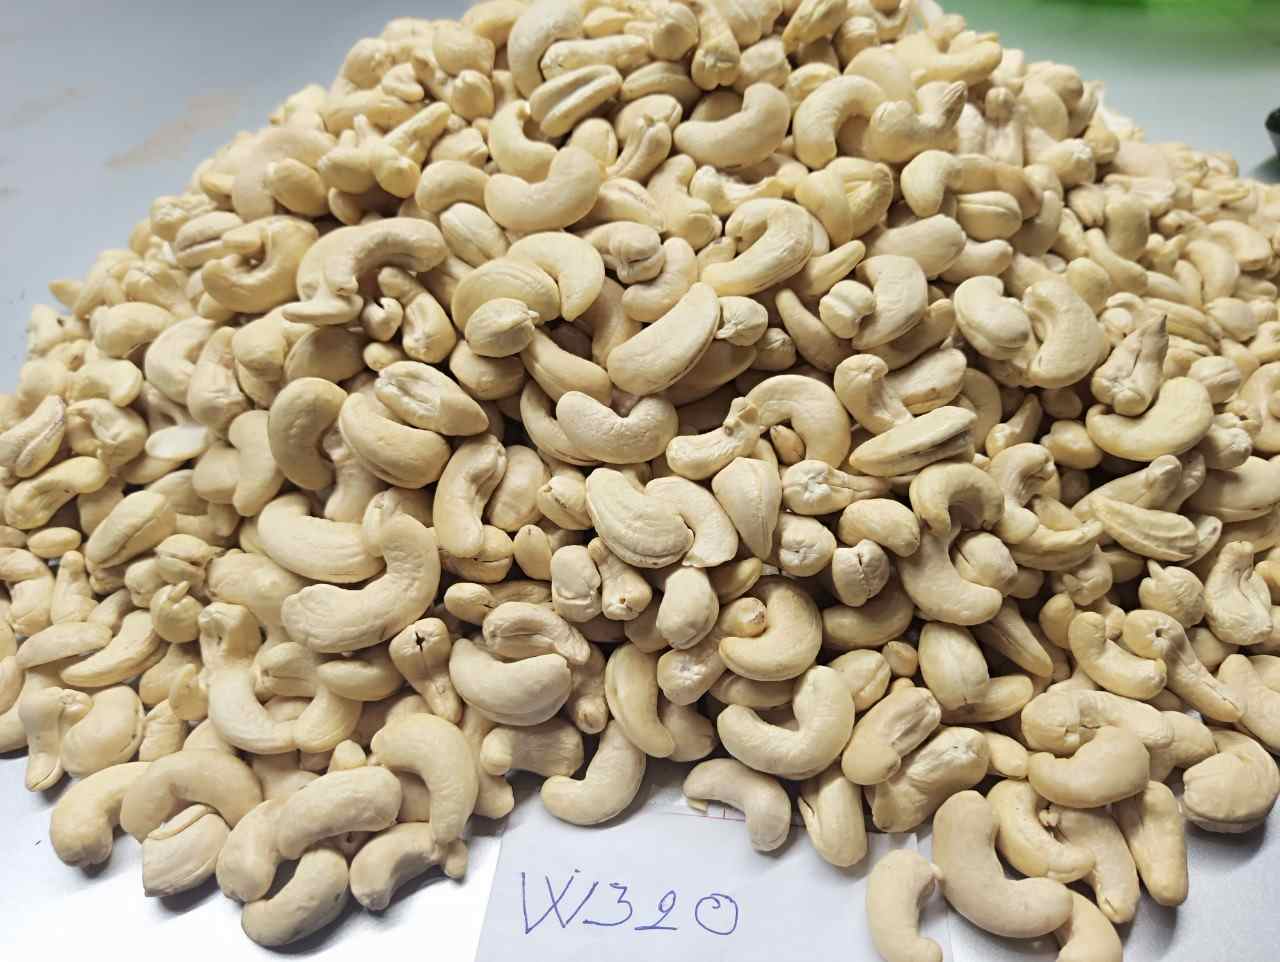 Vietnam W320 grade cashew kernels based-on AFI1999 Standard - Kimmy Farm Raw Product Image.